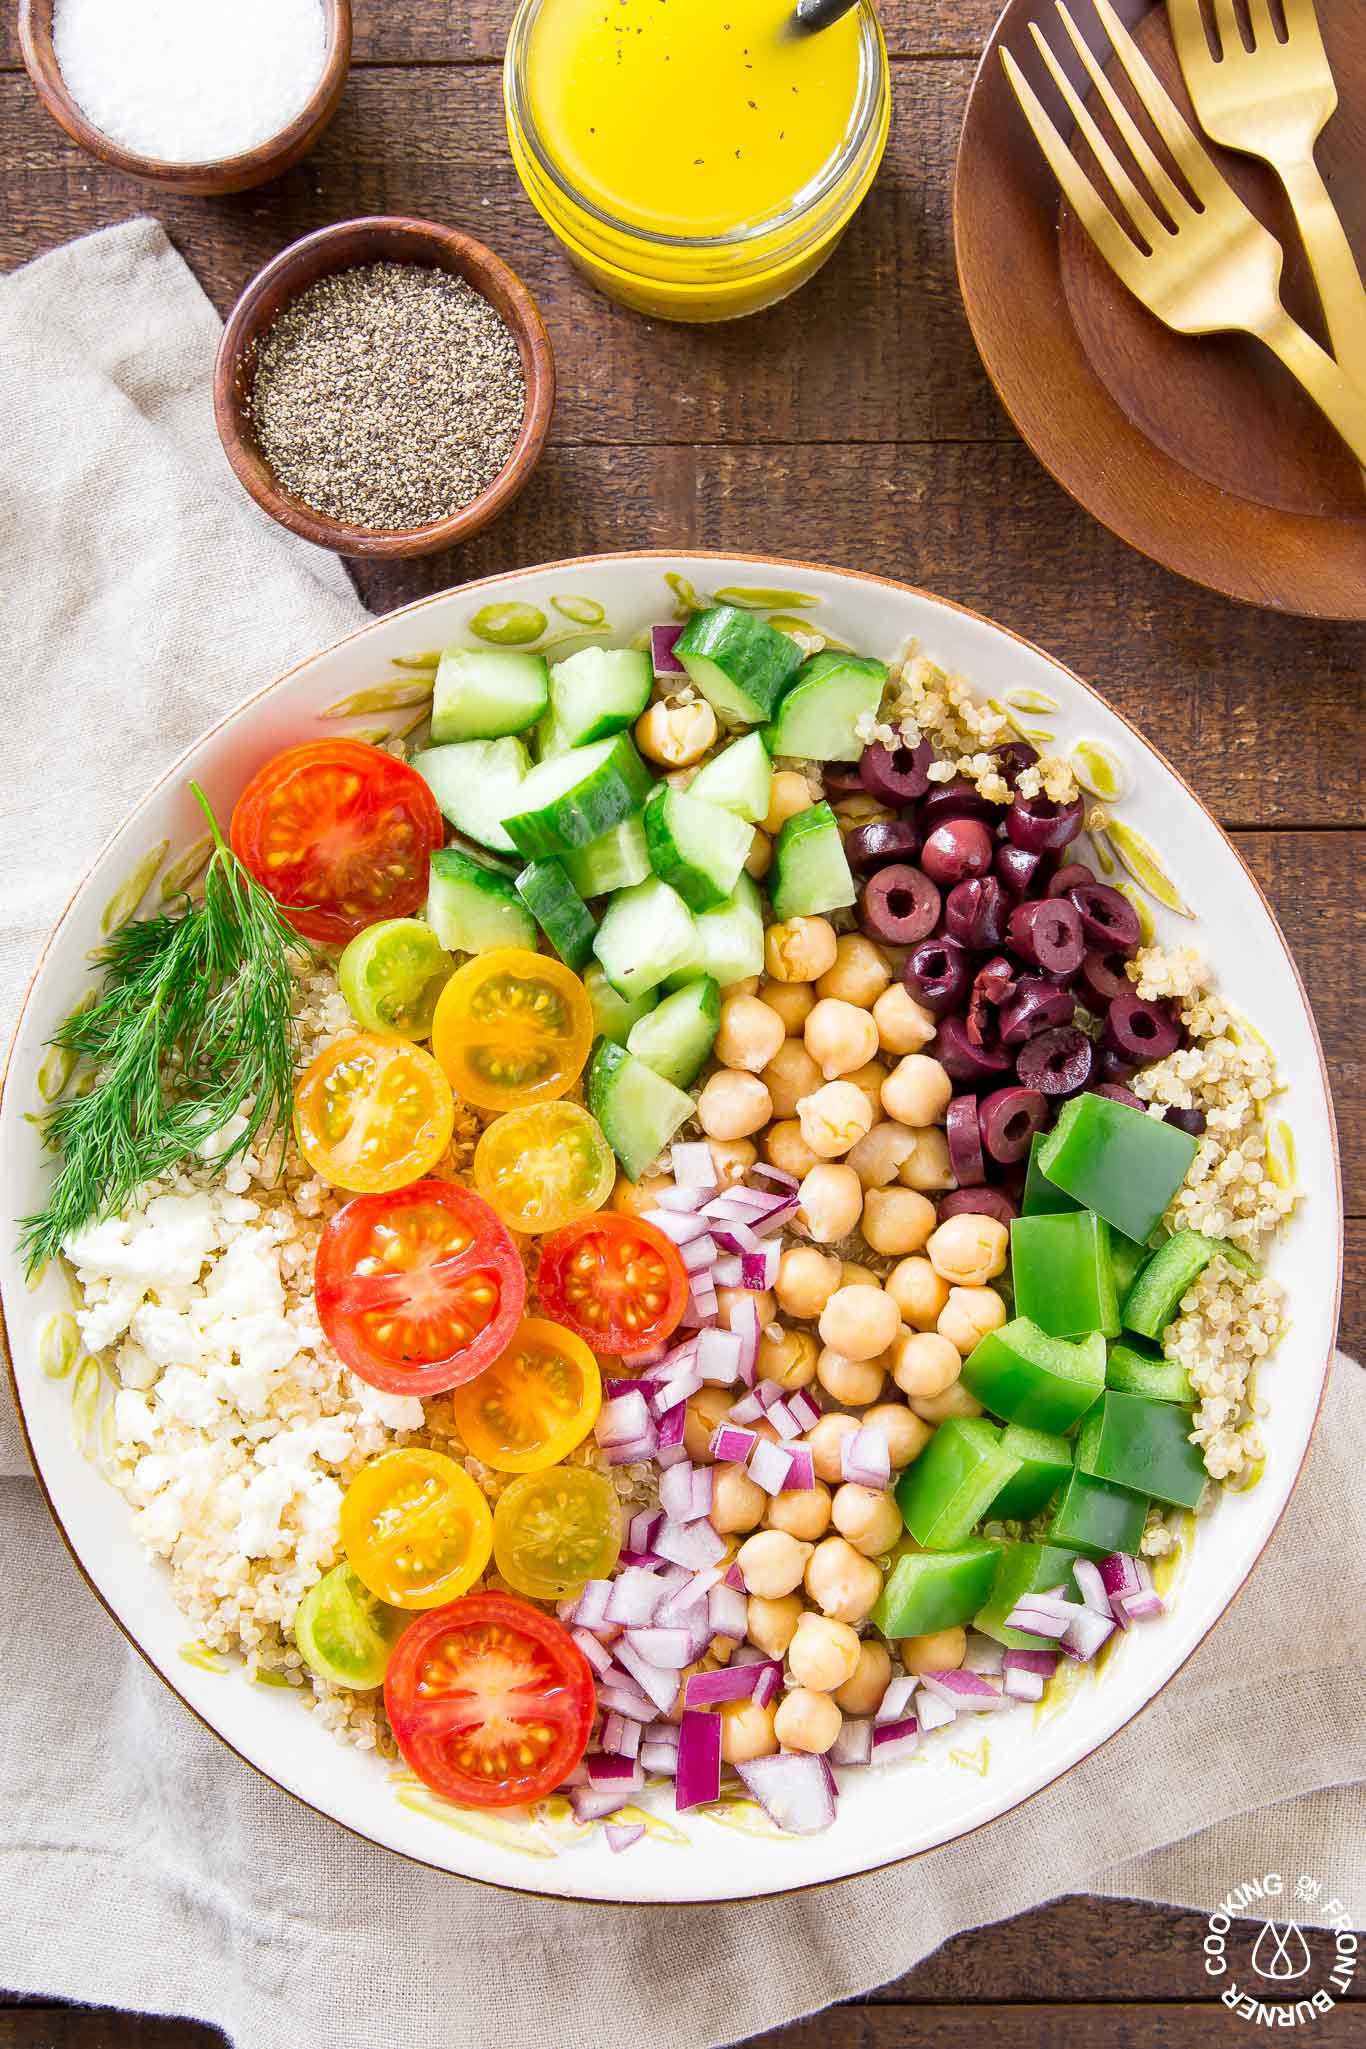 https://www.cookingonthefrontburners.com/wp-content/uploads/2018/03/Greek-Quinoa-Salad-2.jpg